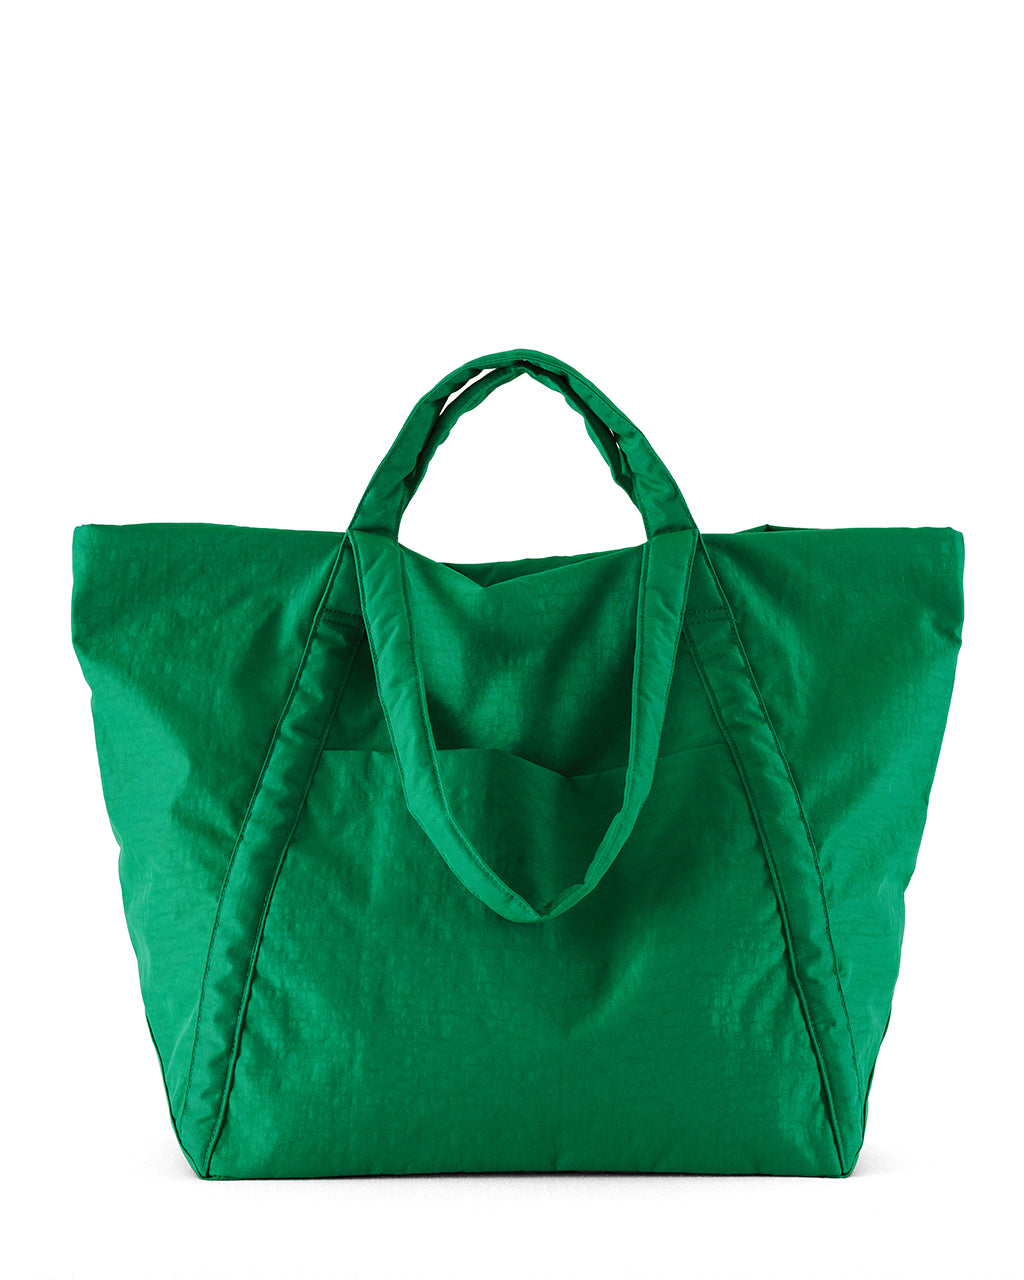 Travel Cloud Bag - Emerald by baggu - tote - ban.do